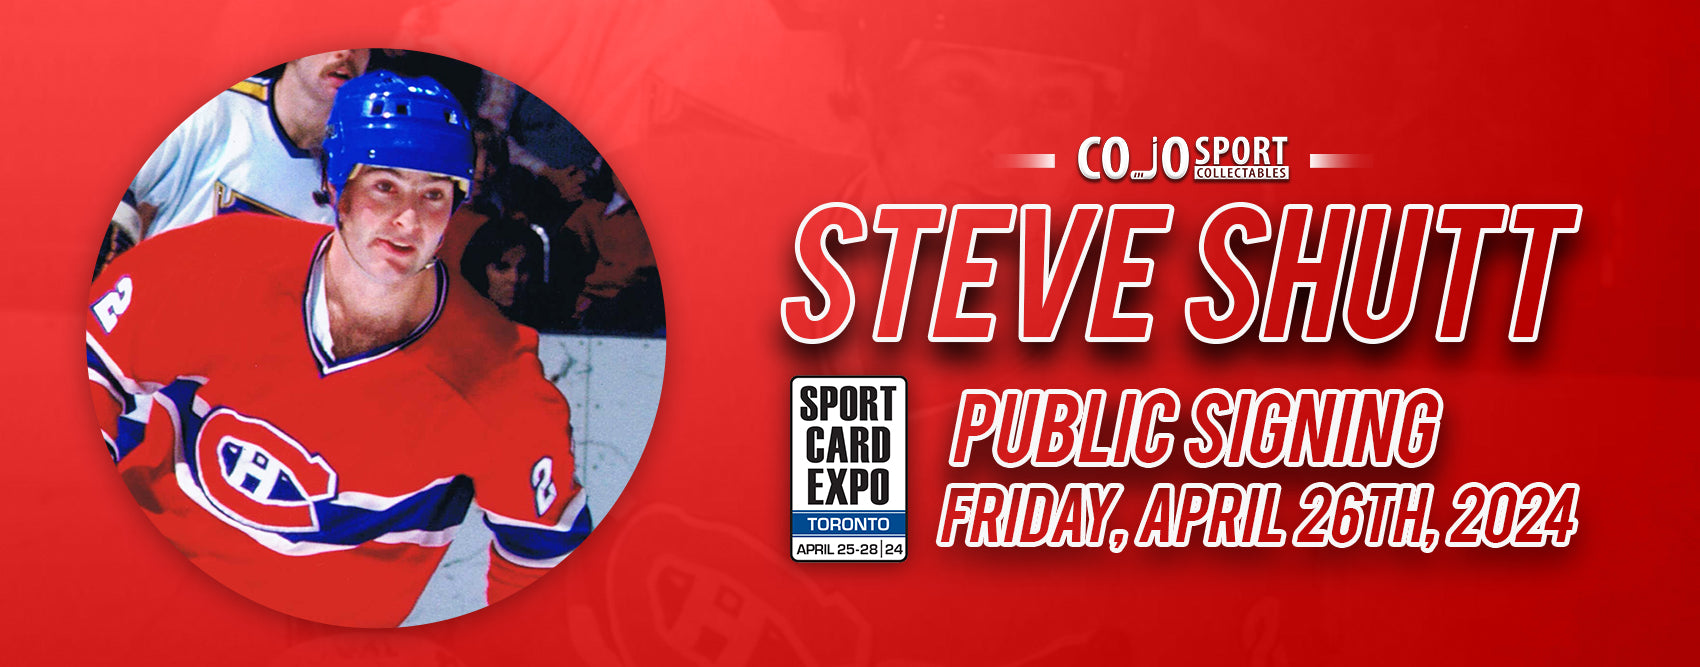 Steve Shutt Signing Banner CoJo Sport Collectables.jpg__PID:9246db44-4b53-4564-9058-6614e68aeaa0